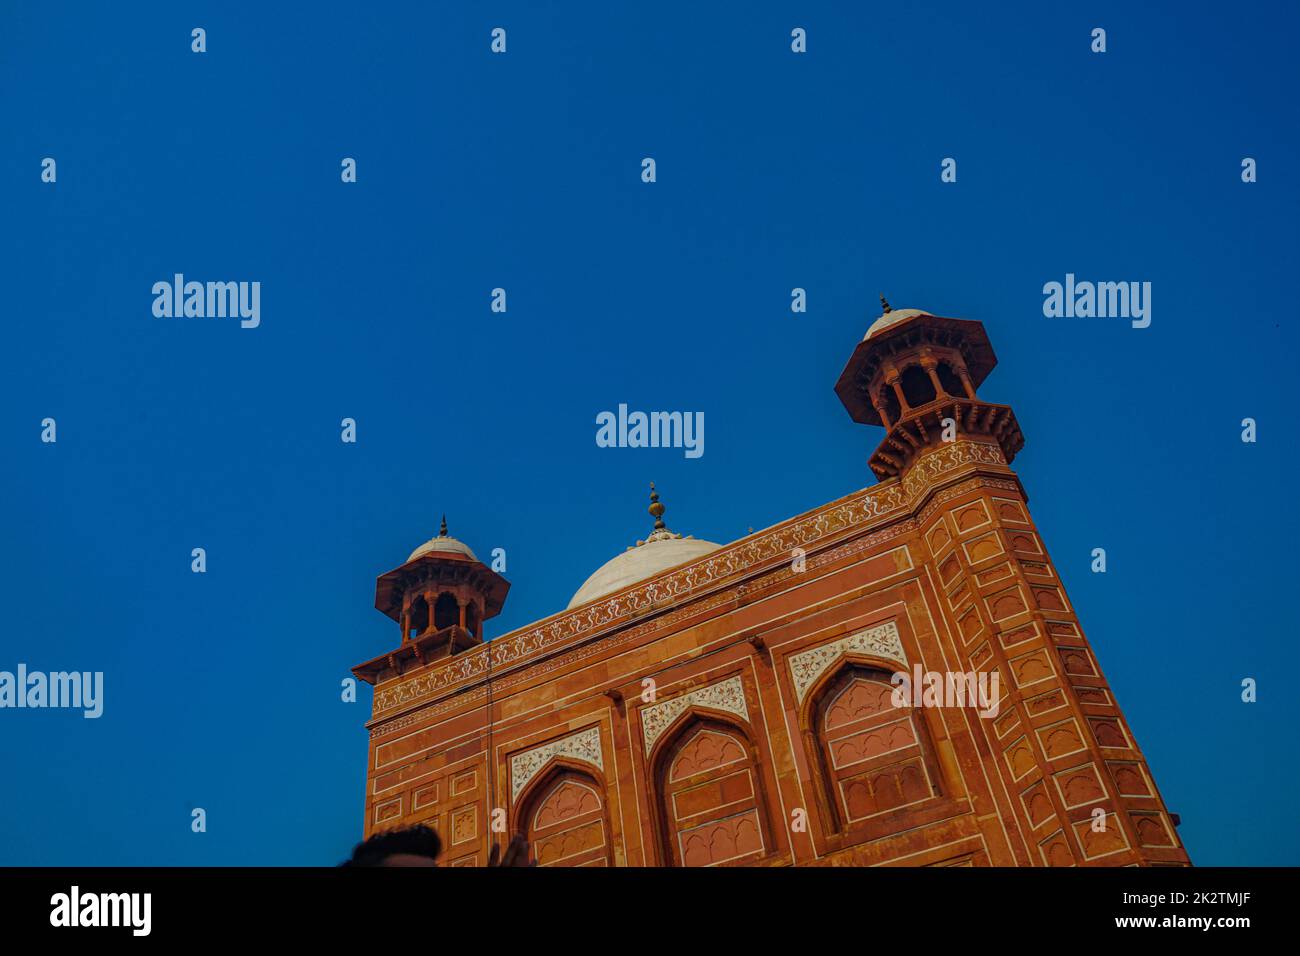 The Taj Mahal of the large tower gate (India, Agra) Stock Photo